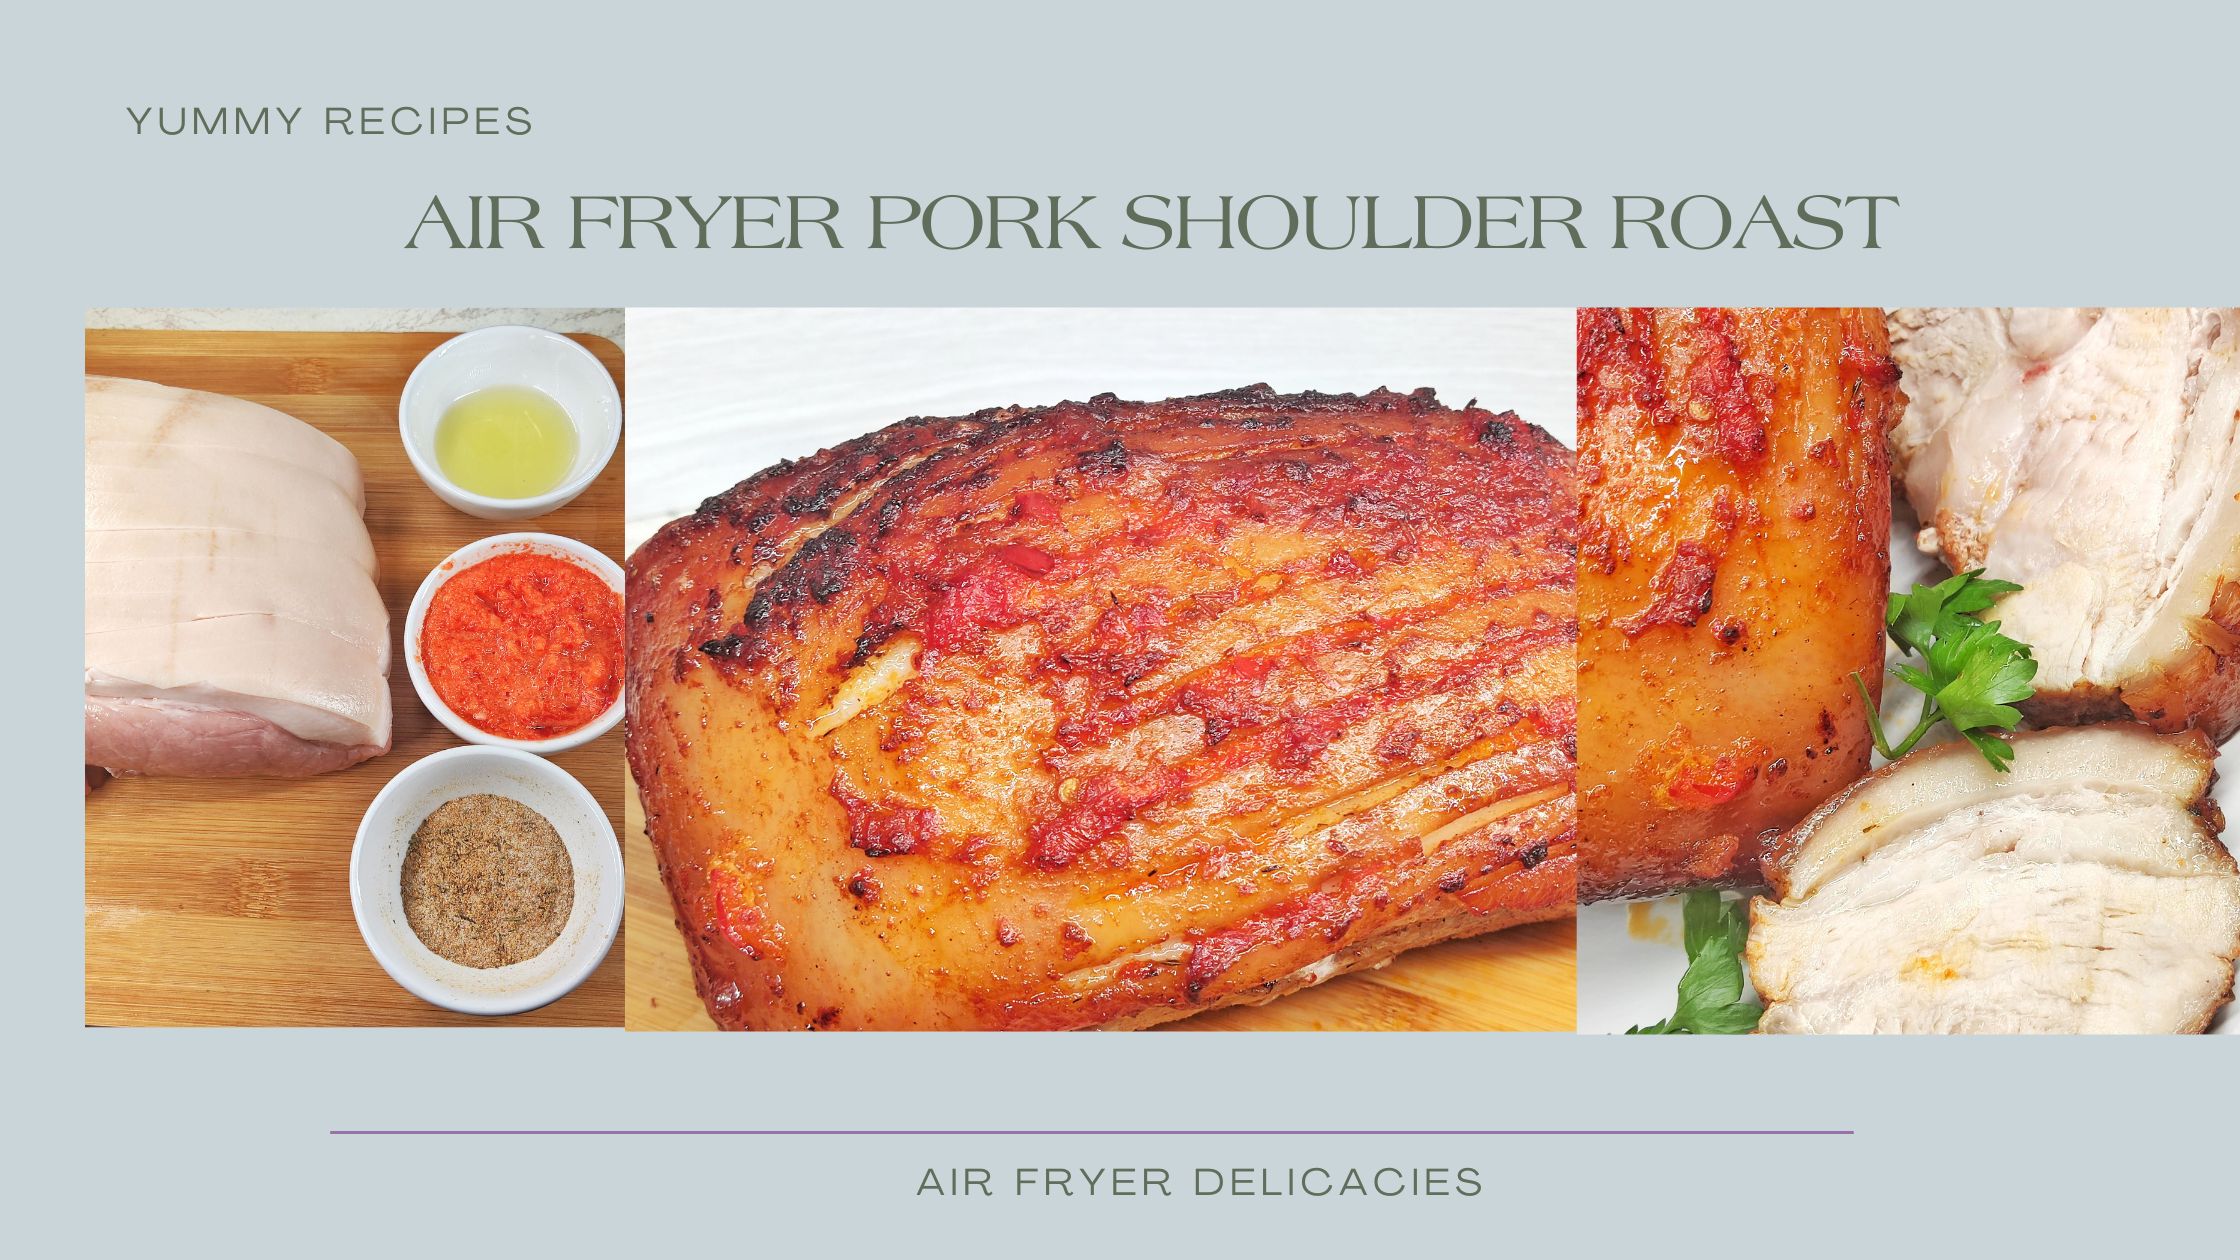 Air fryer pork shoulder roast recipe